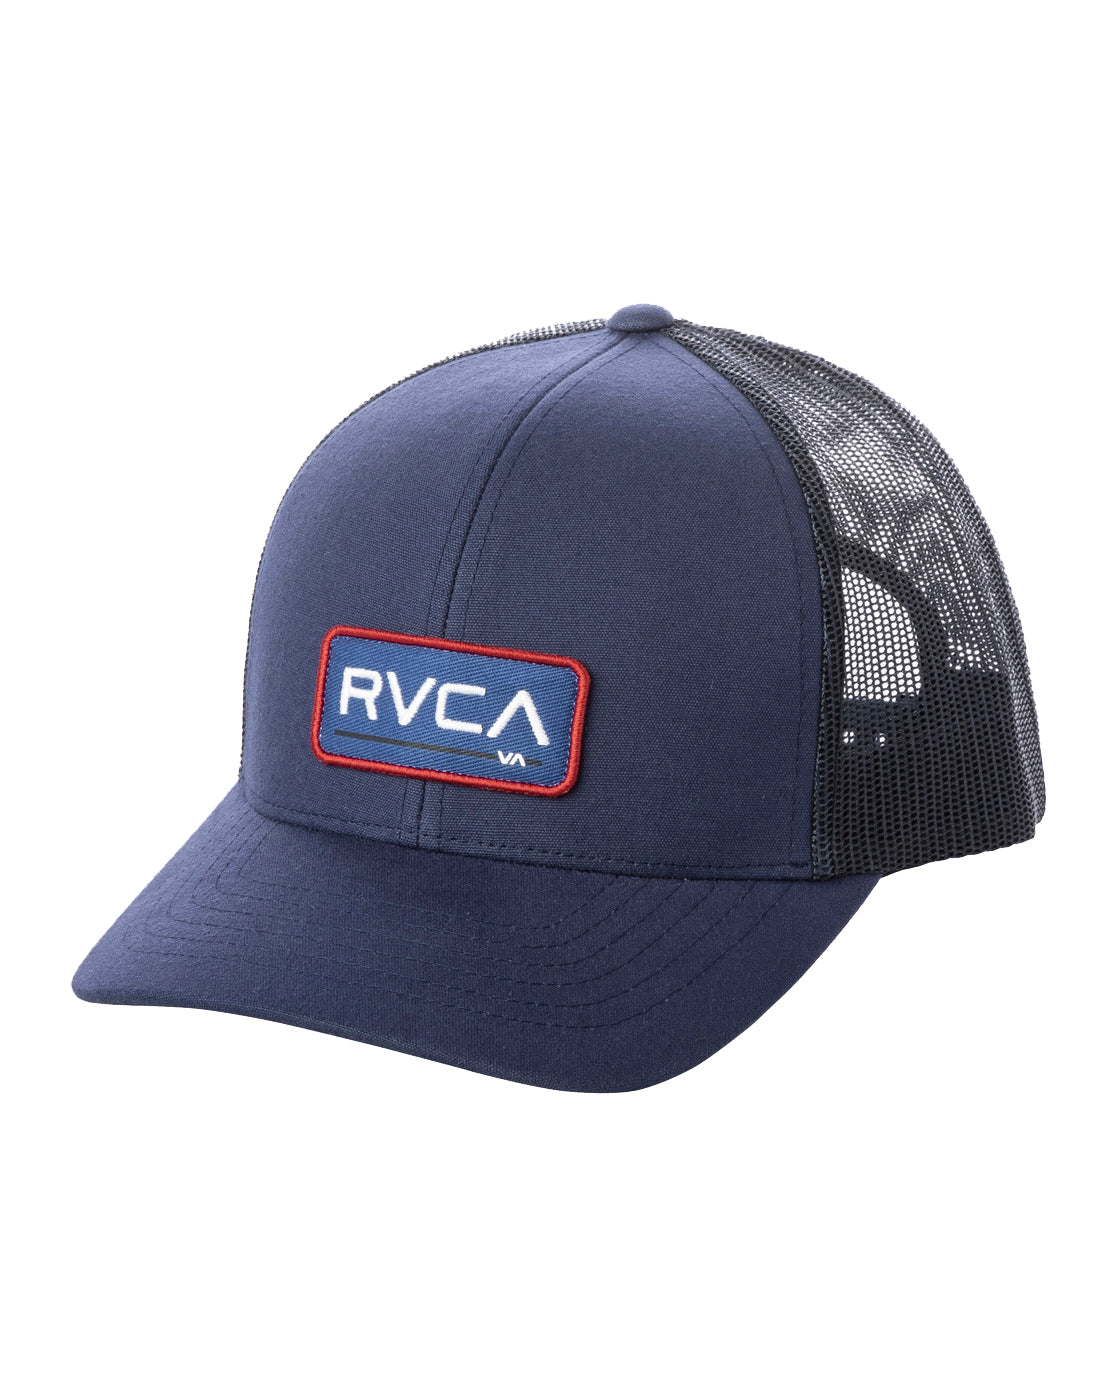 RVCA Ticket Trucker Hat MYV OS